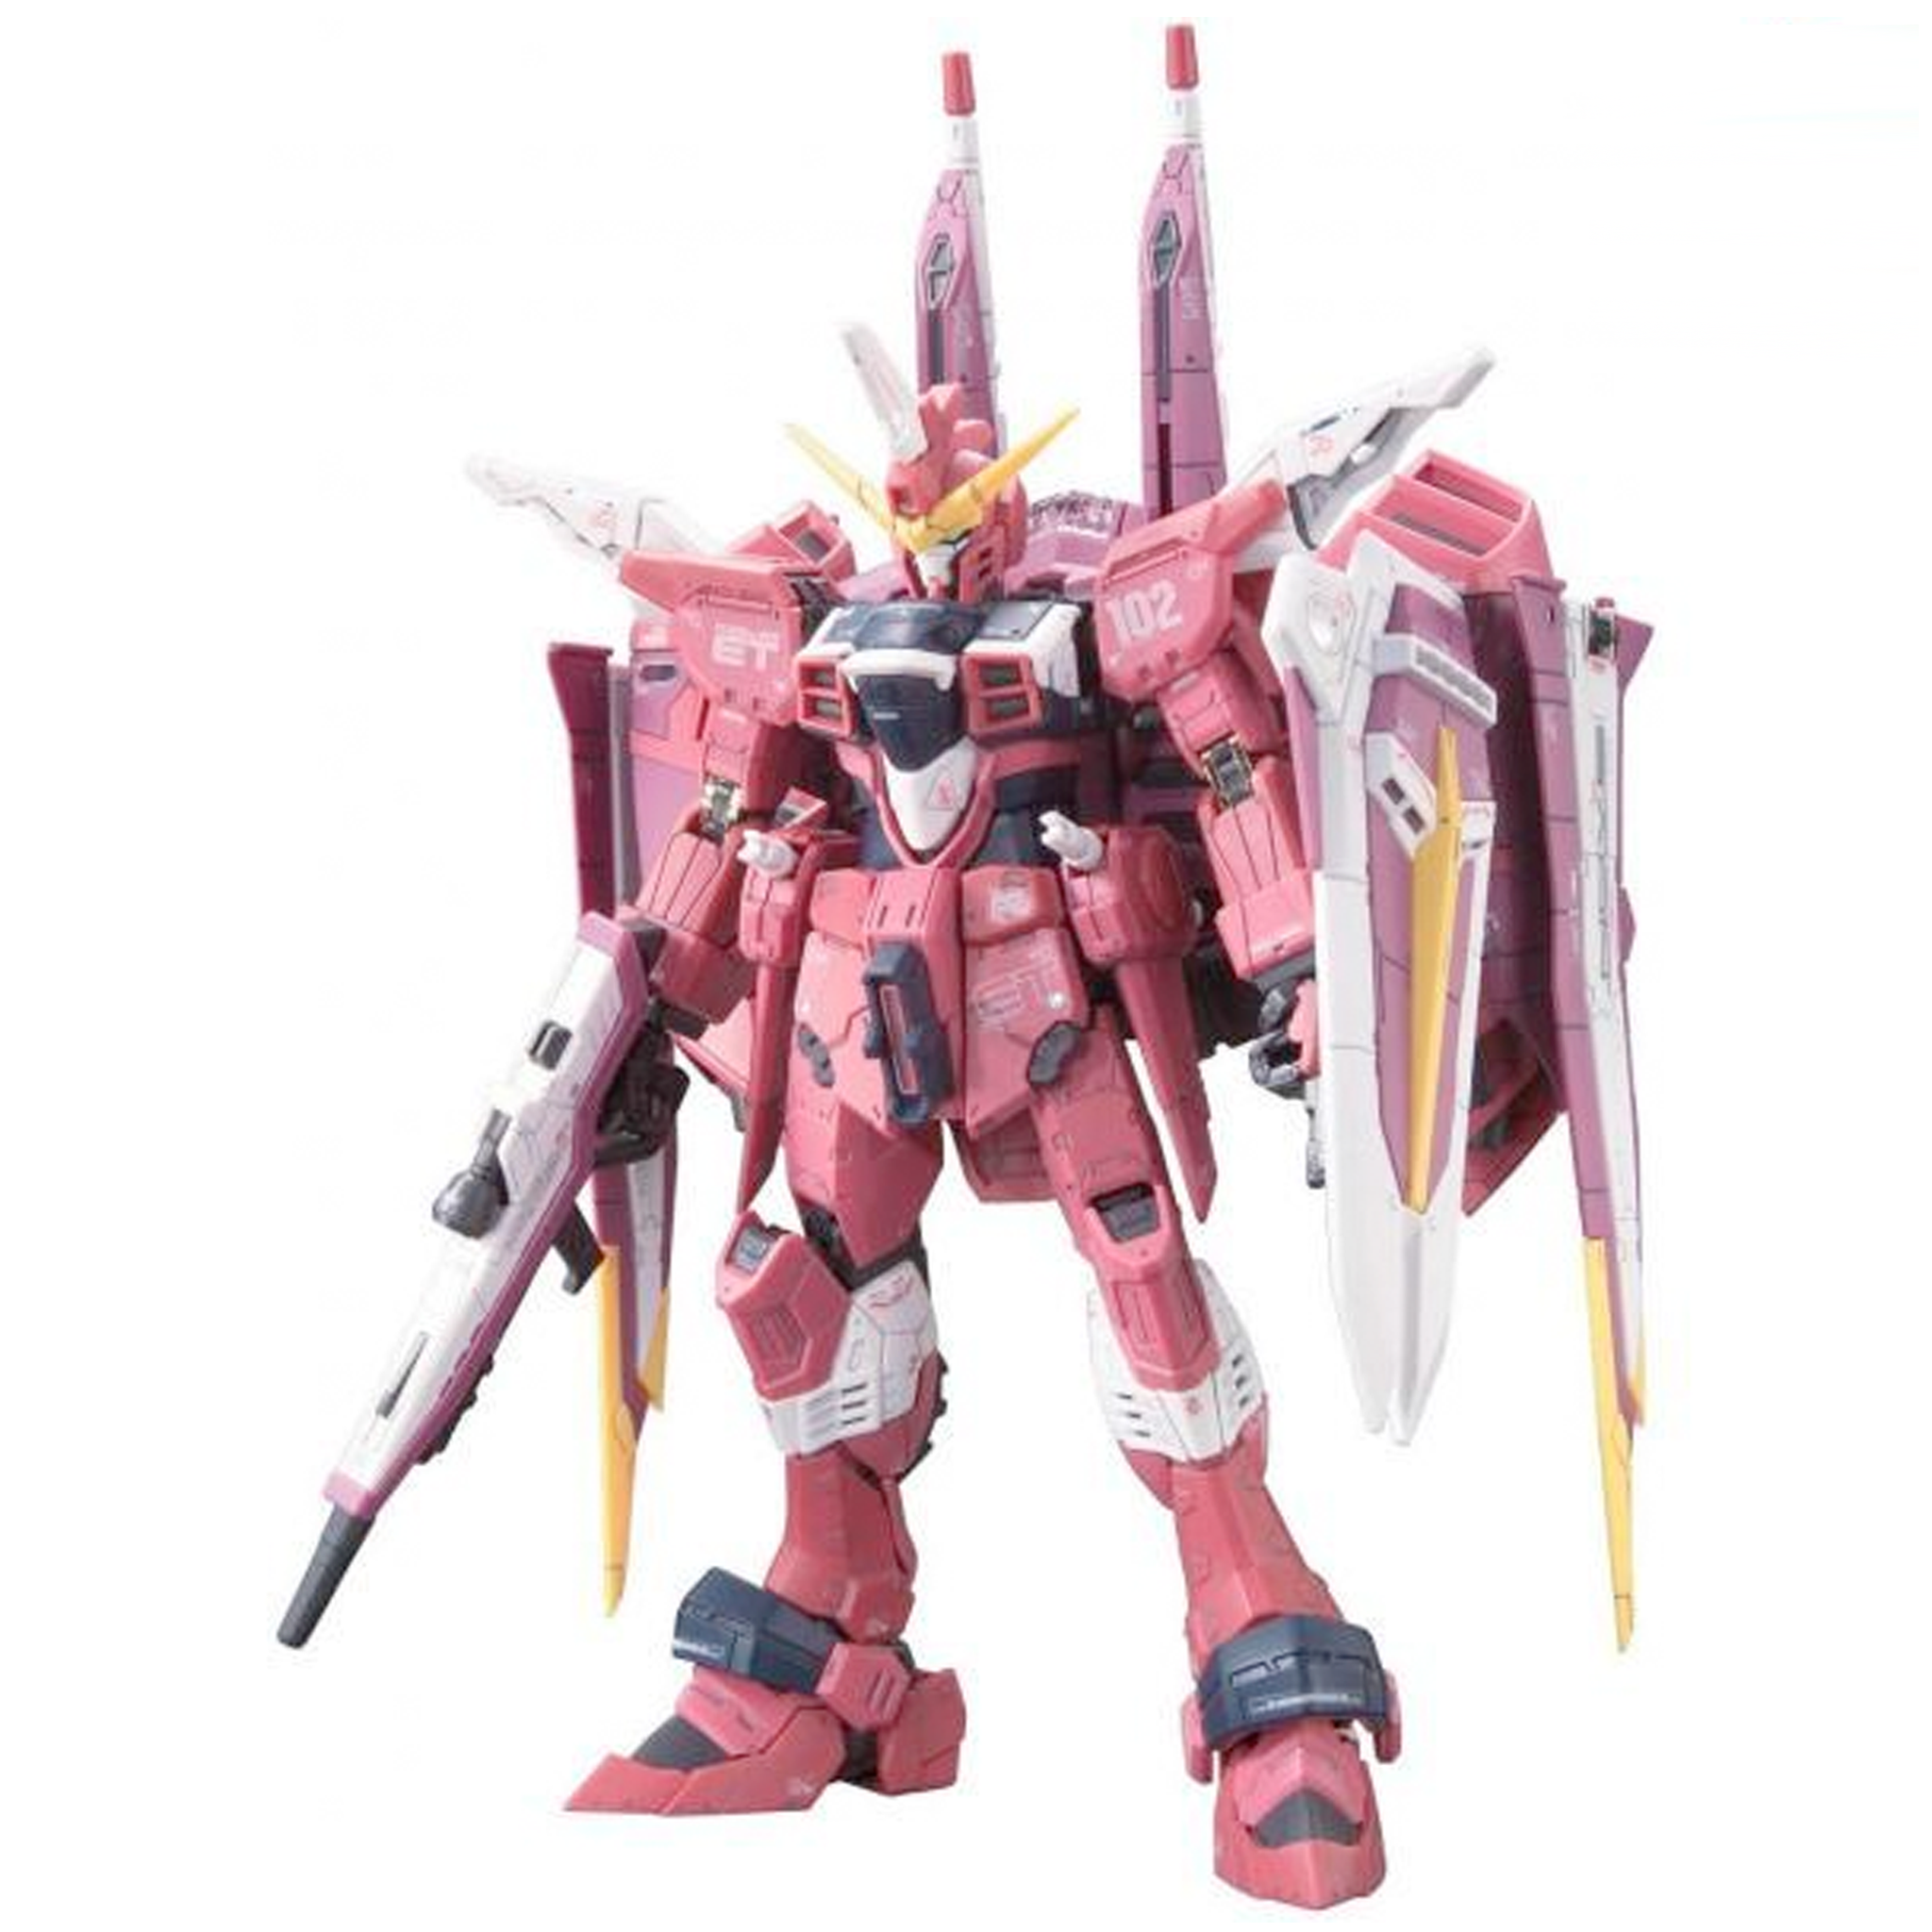 RG ZGMF-X09A Justice Gundam 1/144